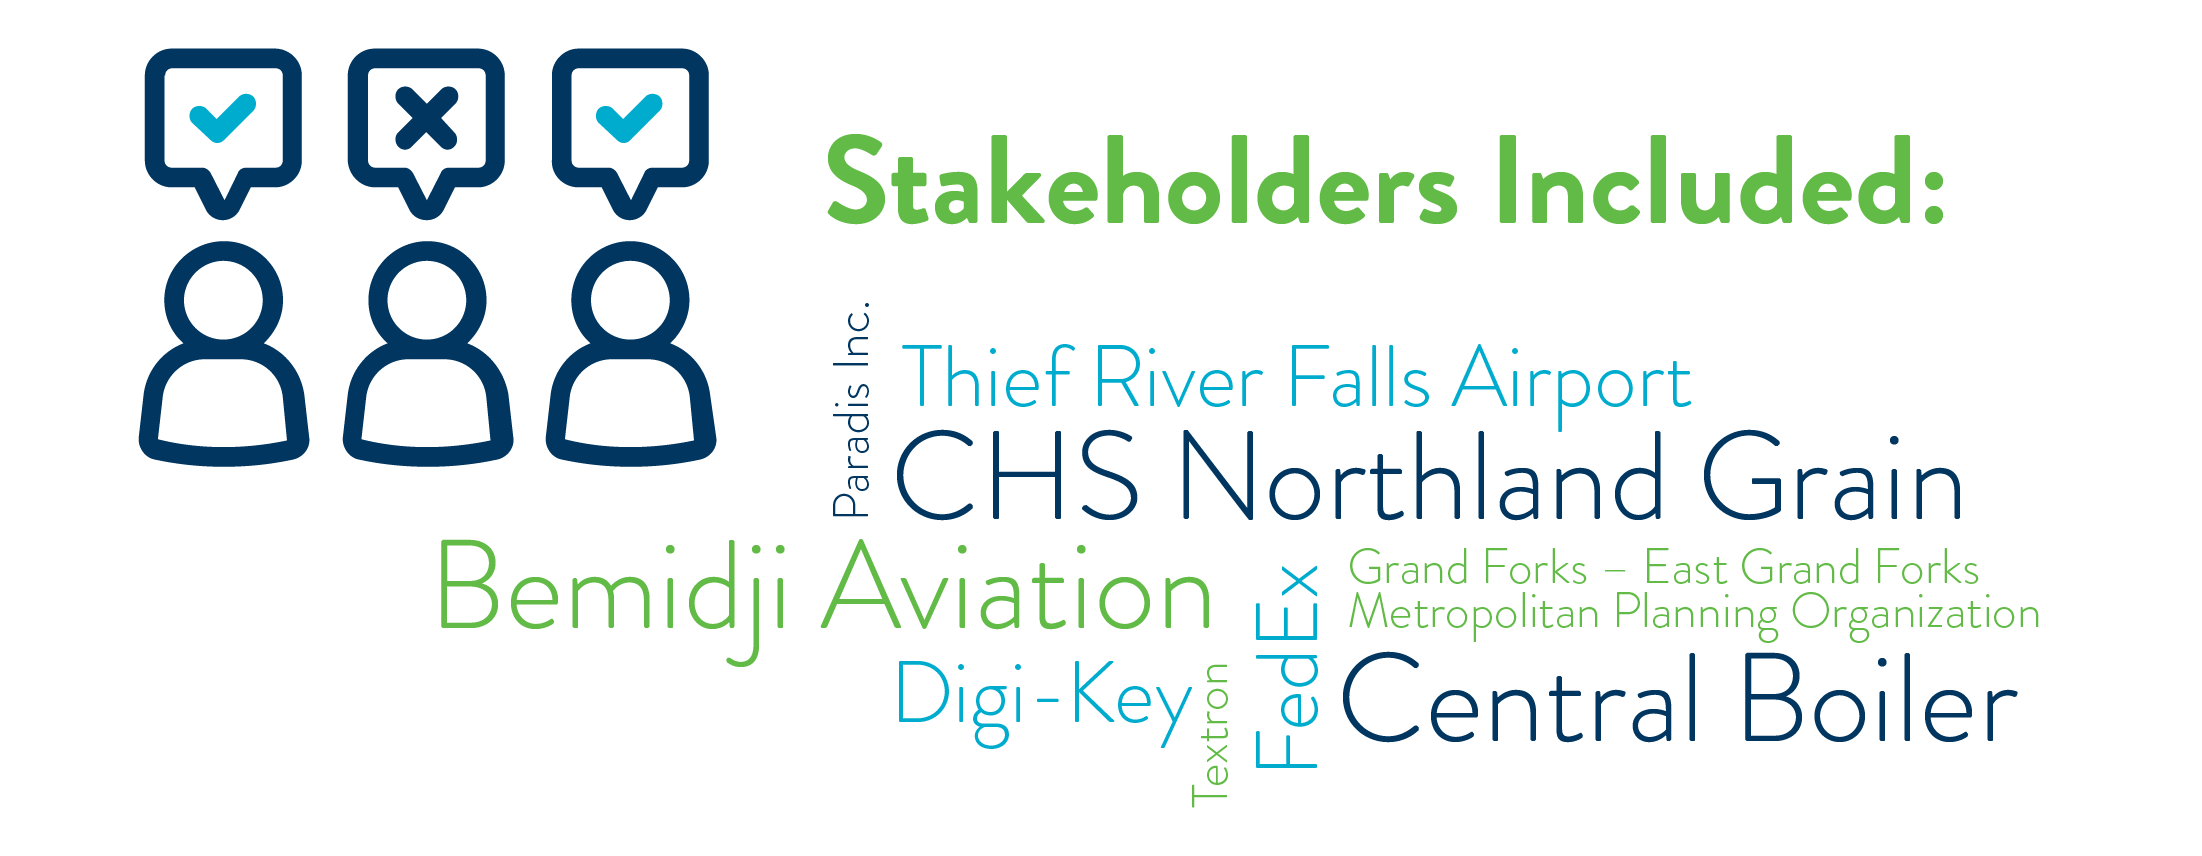 List of stakeholders: Bemidji Aviation, Central Boiler, CHS Northland Grain, Digi-Key, FedEx, Grand Forks – East Grand Forks MPO, Paradis Inc., Textron, Thief River Falls Airport